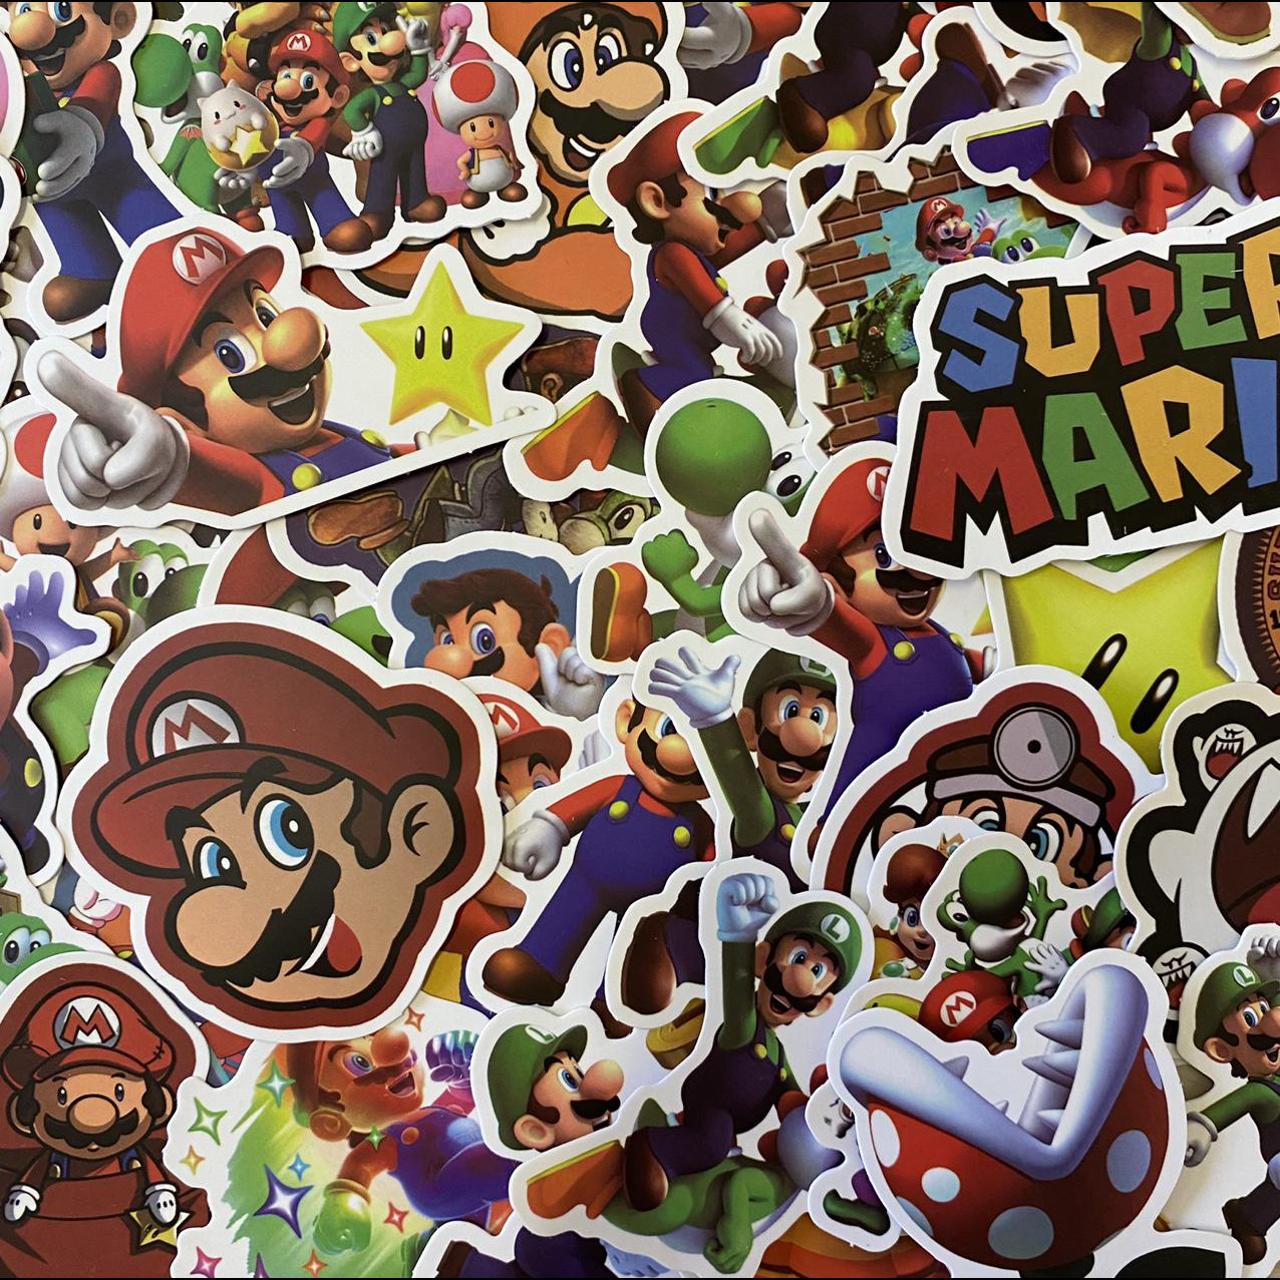 Product Image 1 - NEW!
Mario Kart / Super Mario